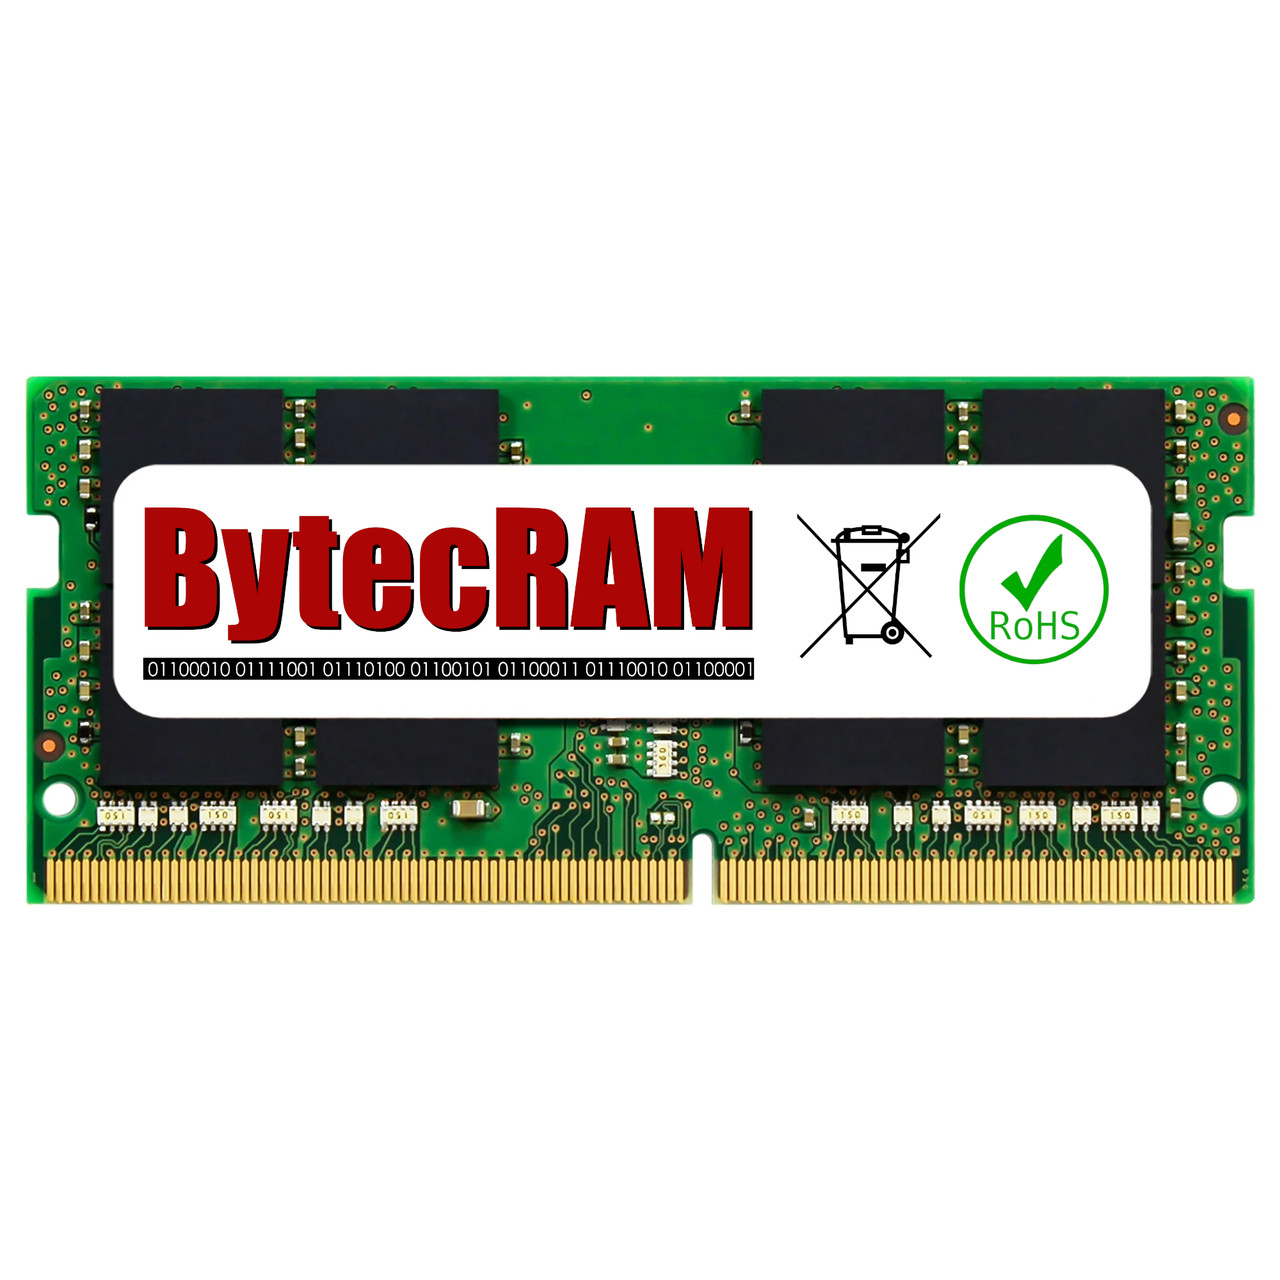 eBay*4GB 260-pin BytecRAM DDR4-2133 PC4-17000 Sodimm (1Rx8) Memory